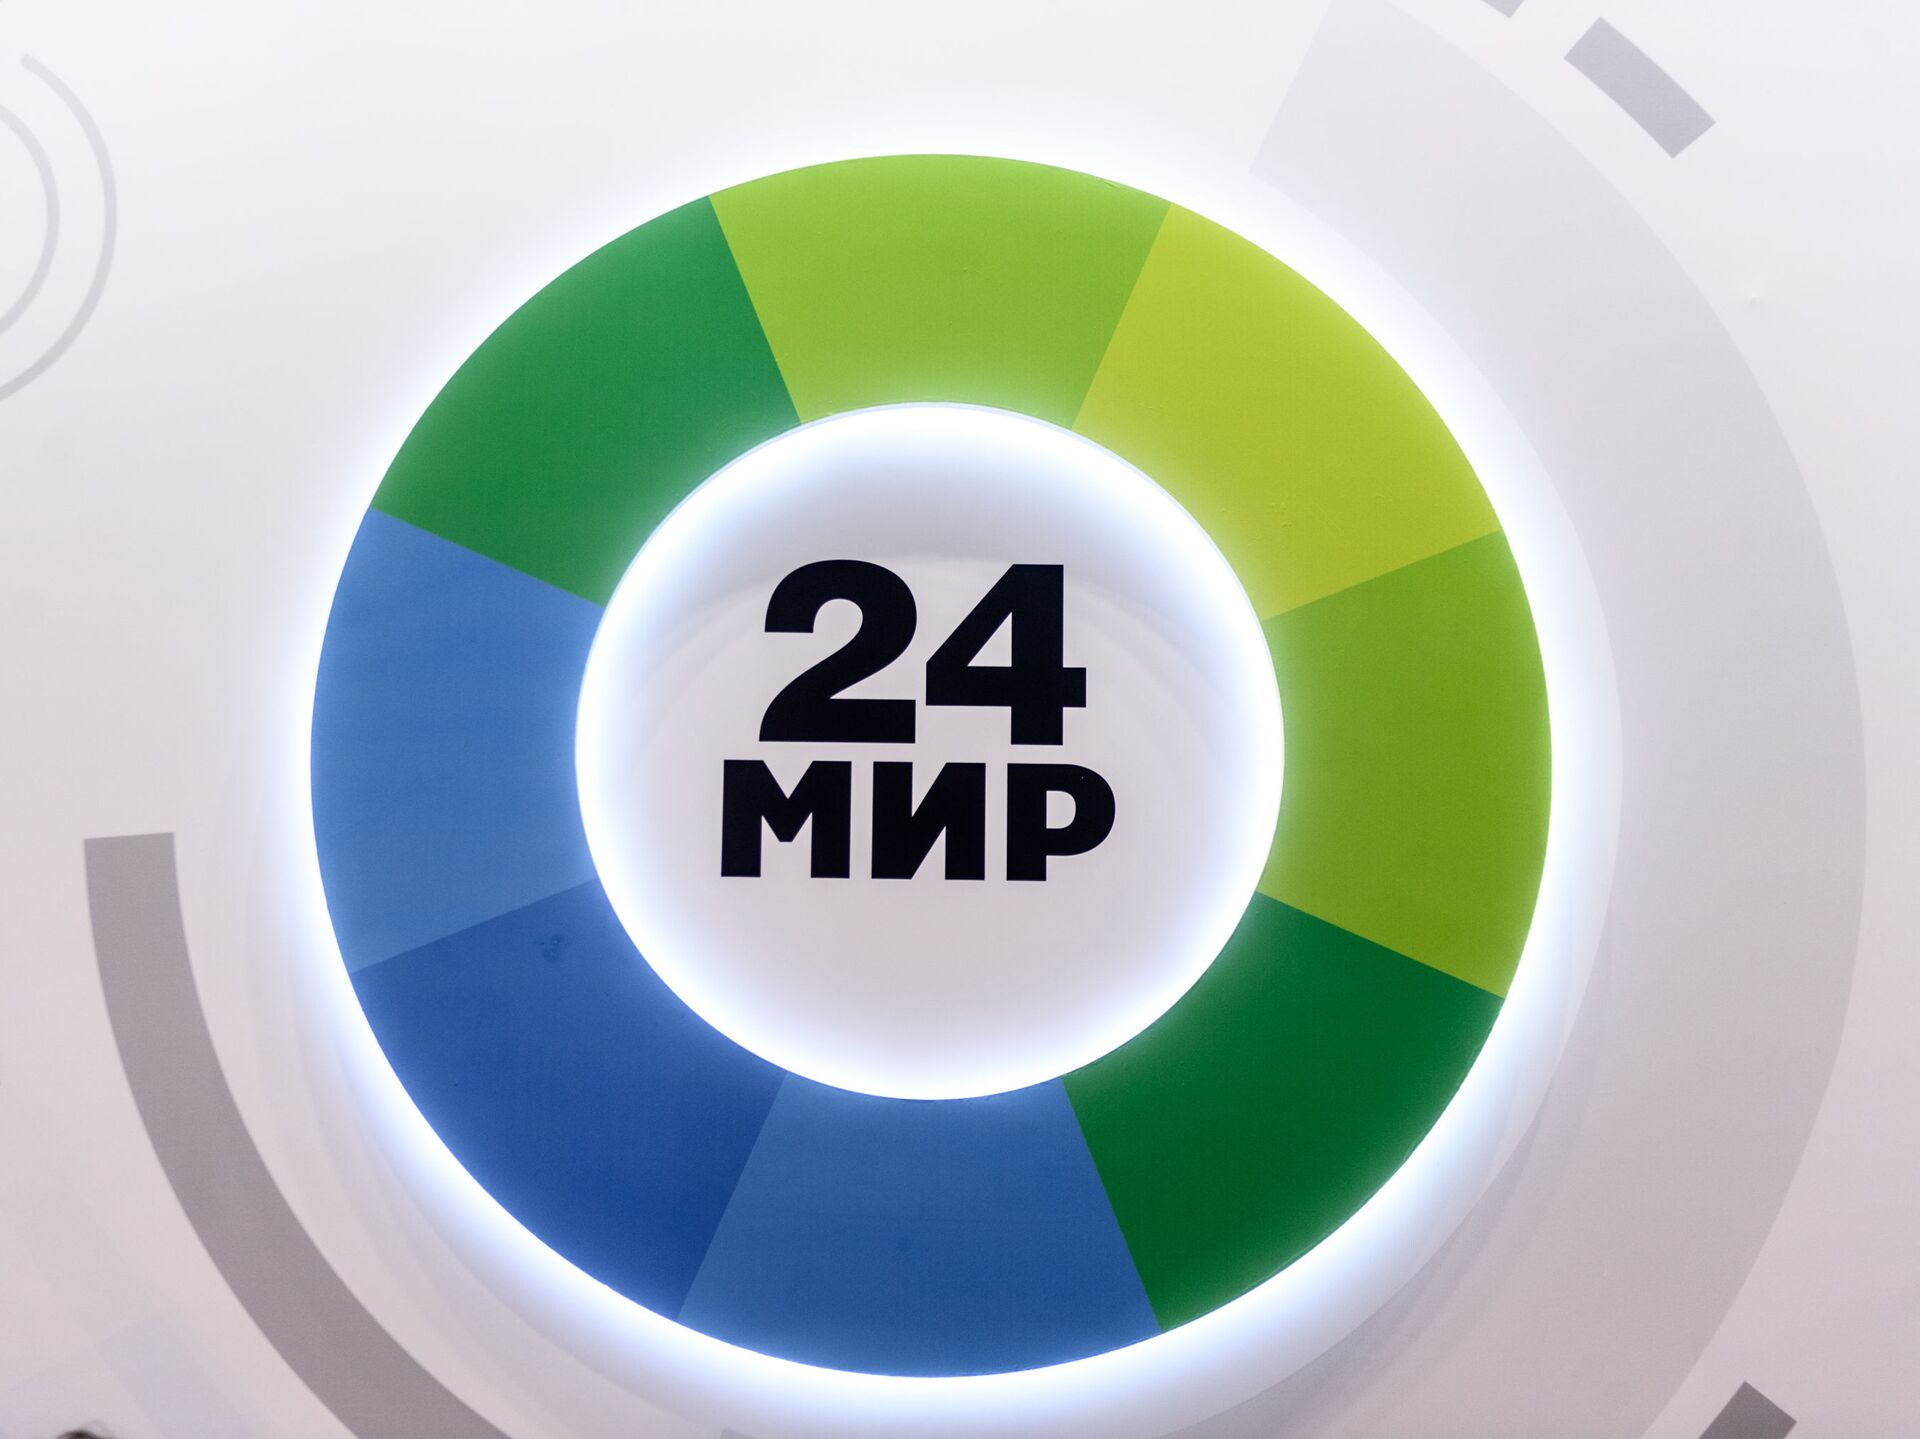 Телеканал мир новости. Логотип телеканала мик24. Мир 24. Телеканал мир 24. Эмблема телеканала мир.